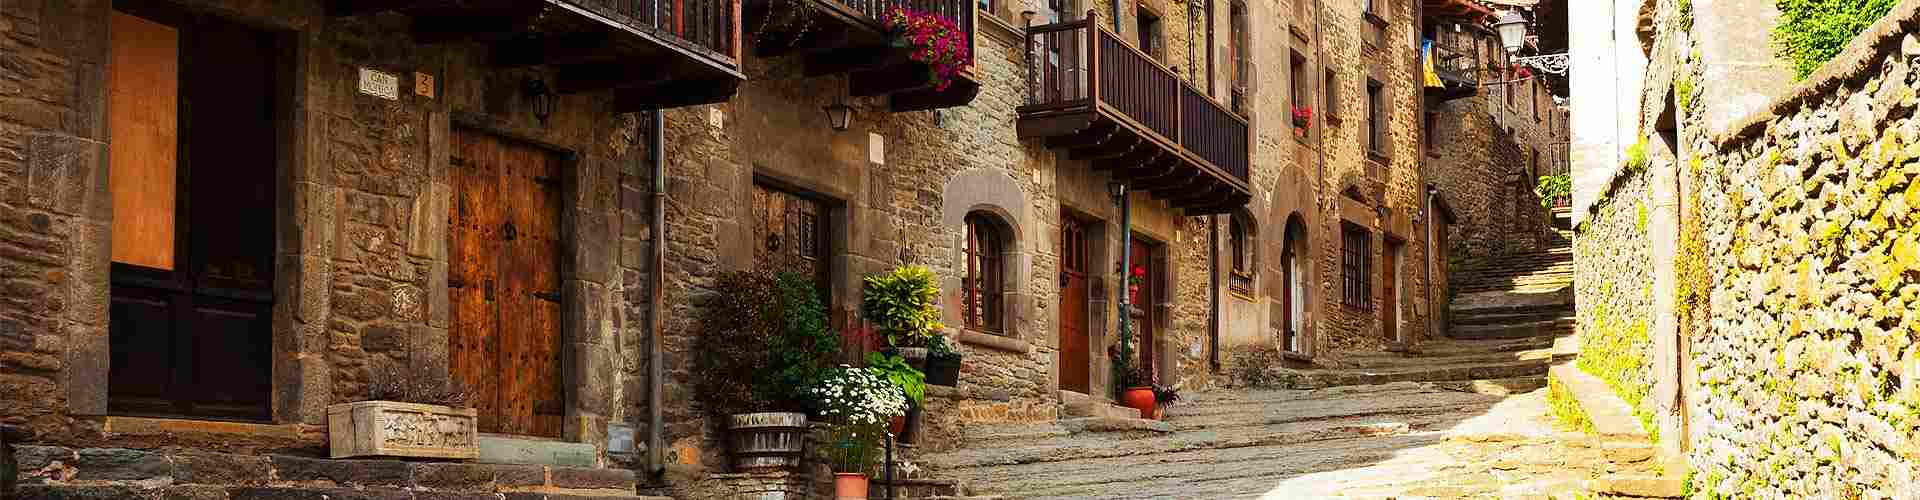 Casas rurales para agosto en Galicia
          
          

